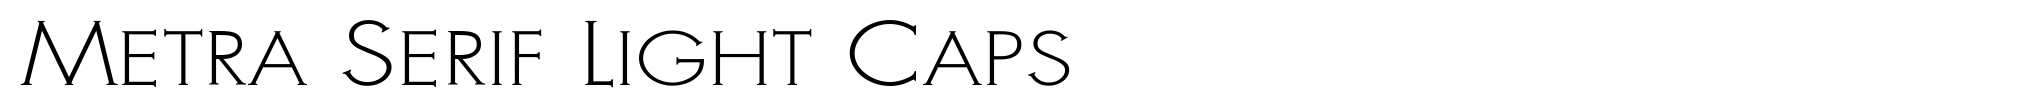 Metra Serif Light Caps image